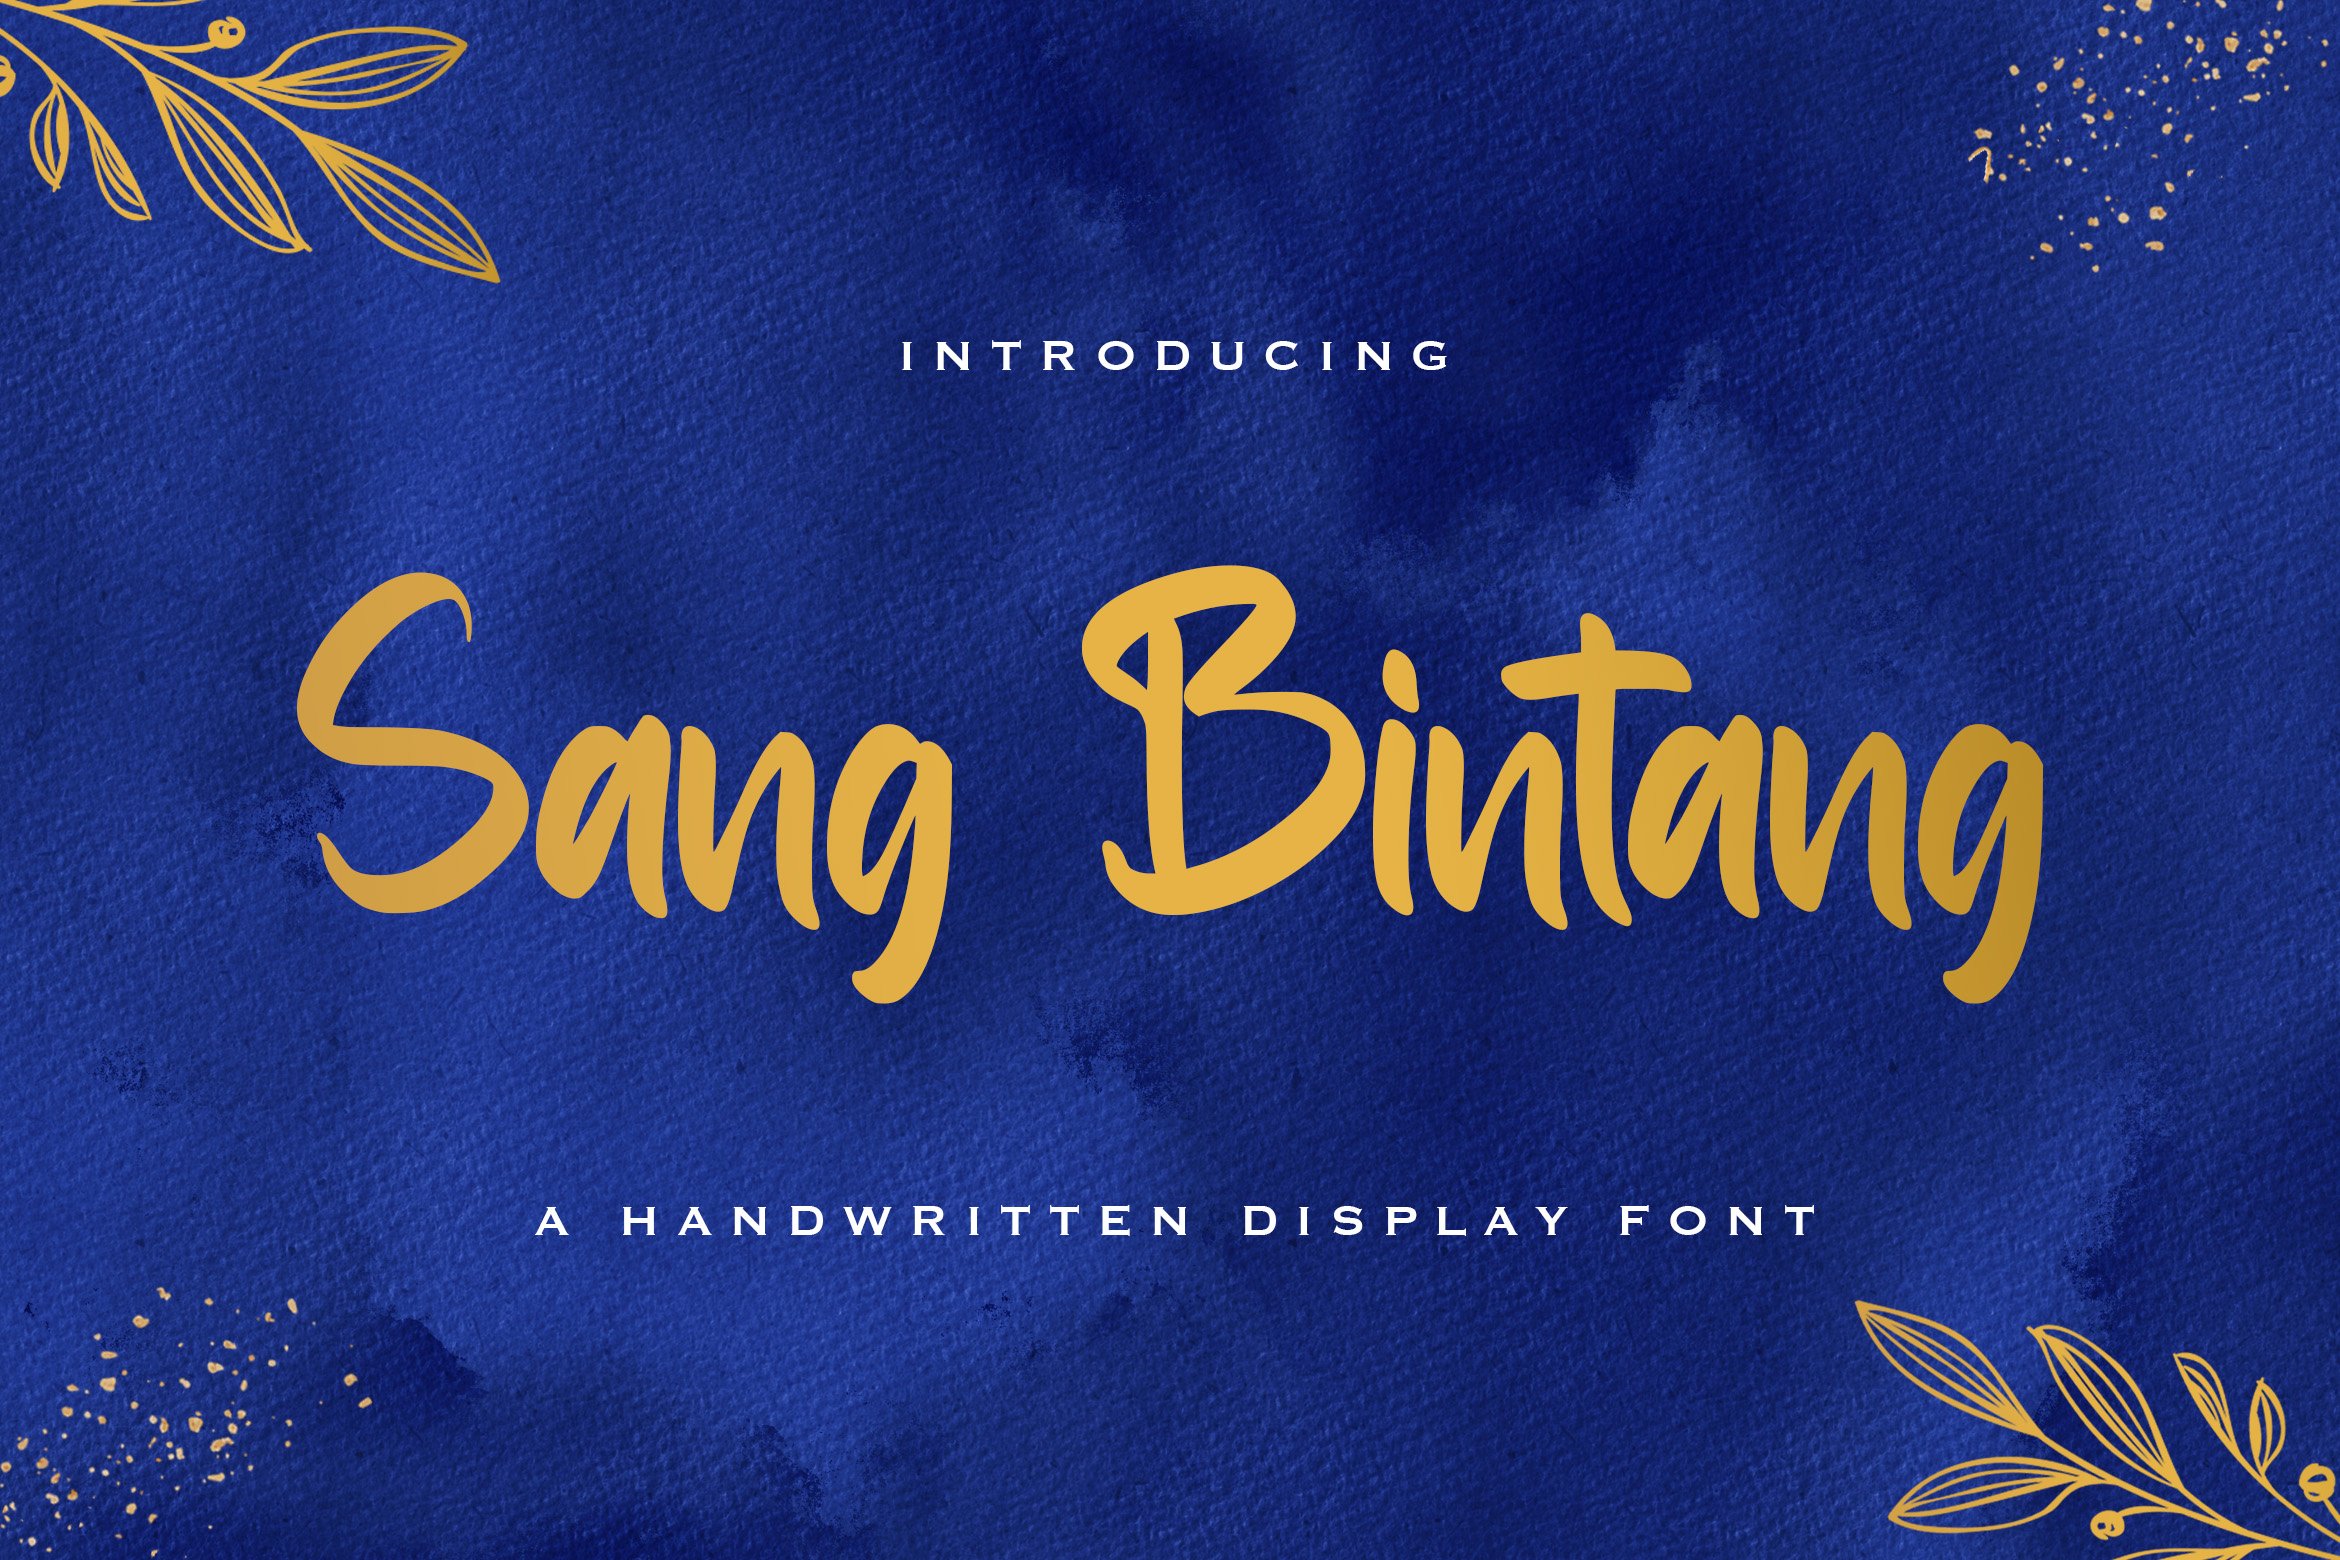 Sang Bintang - Handwritten Font cover image.